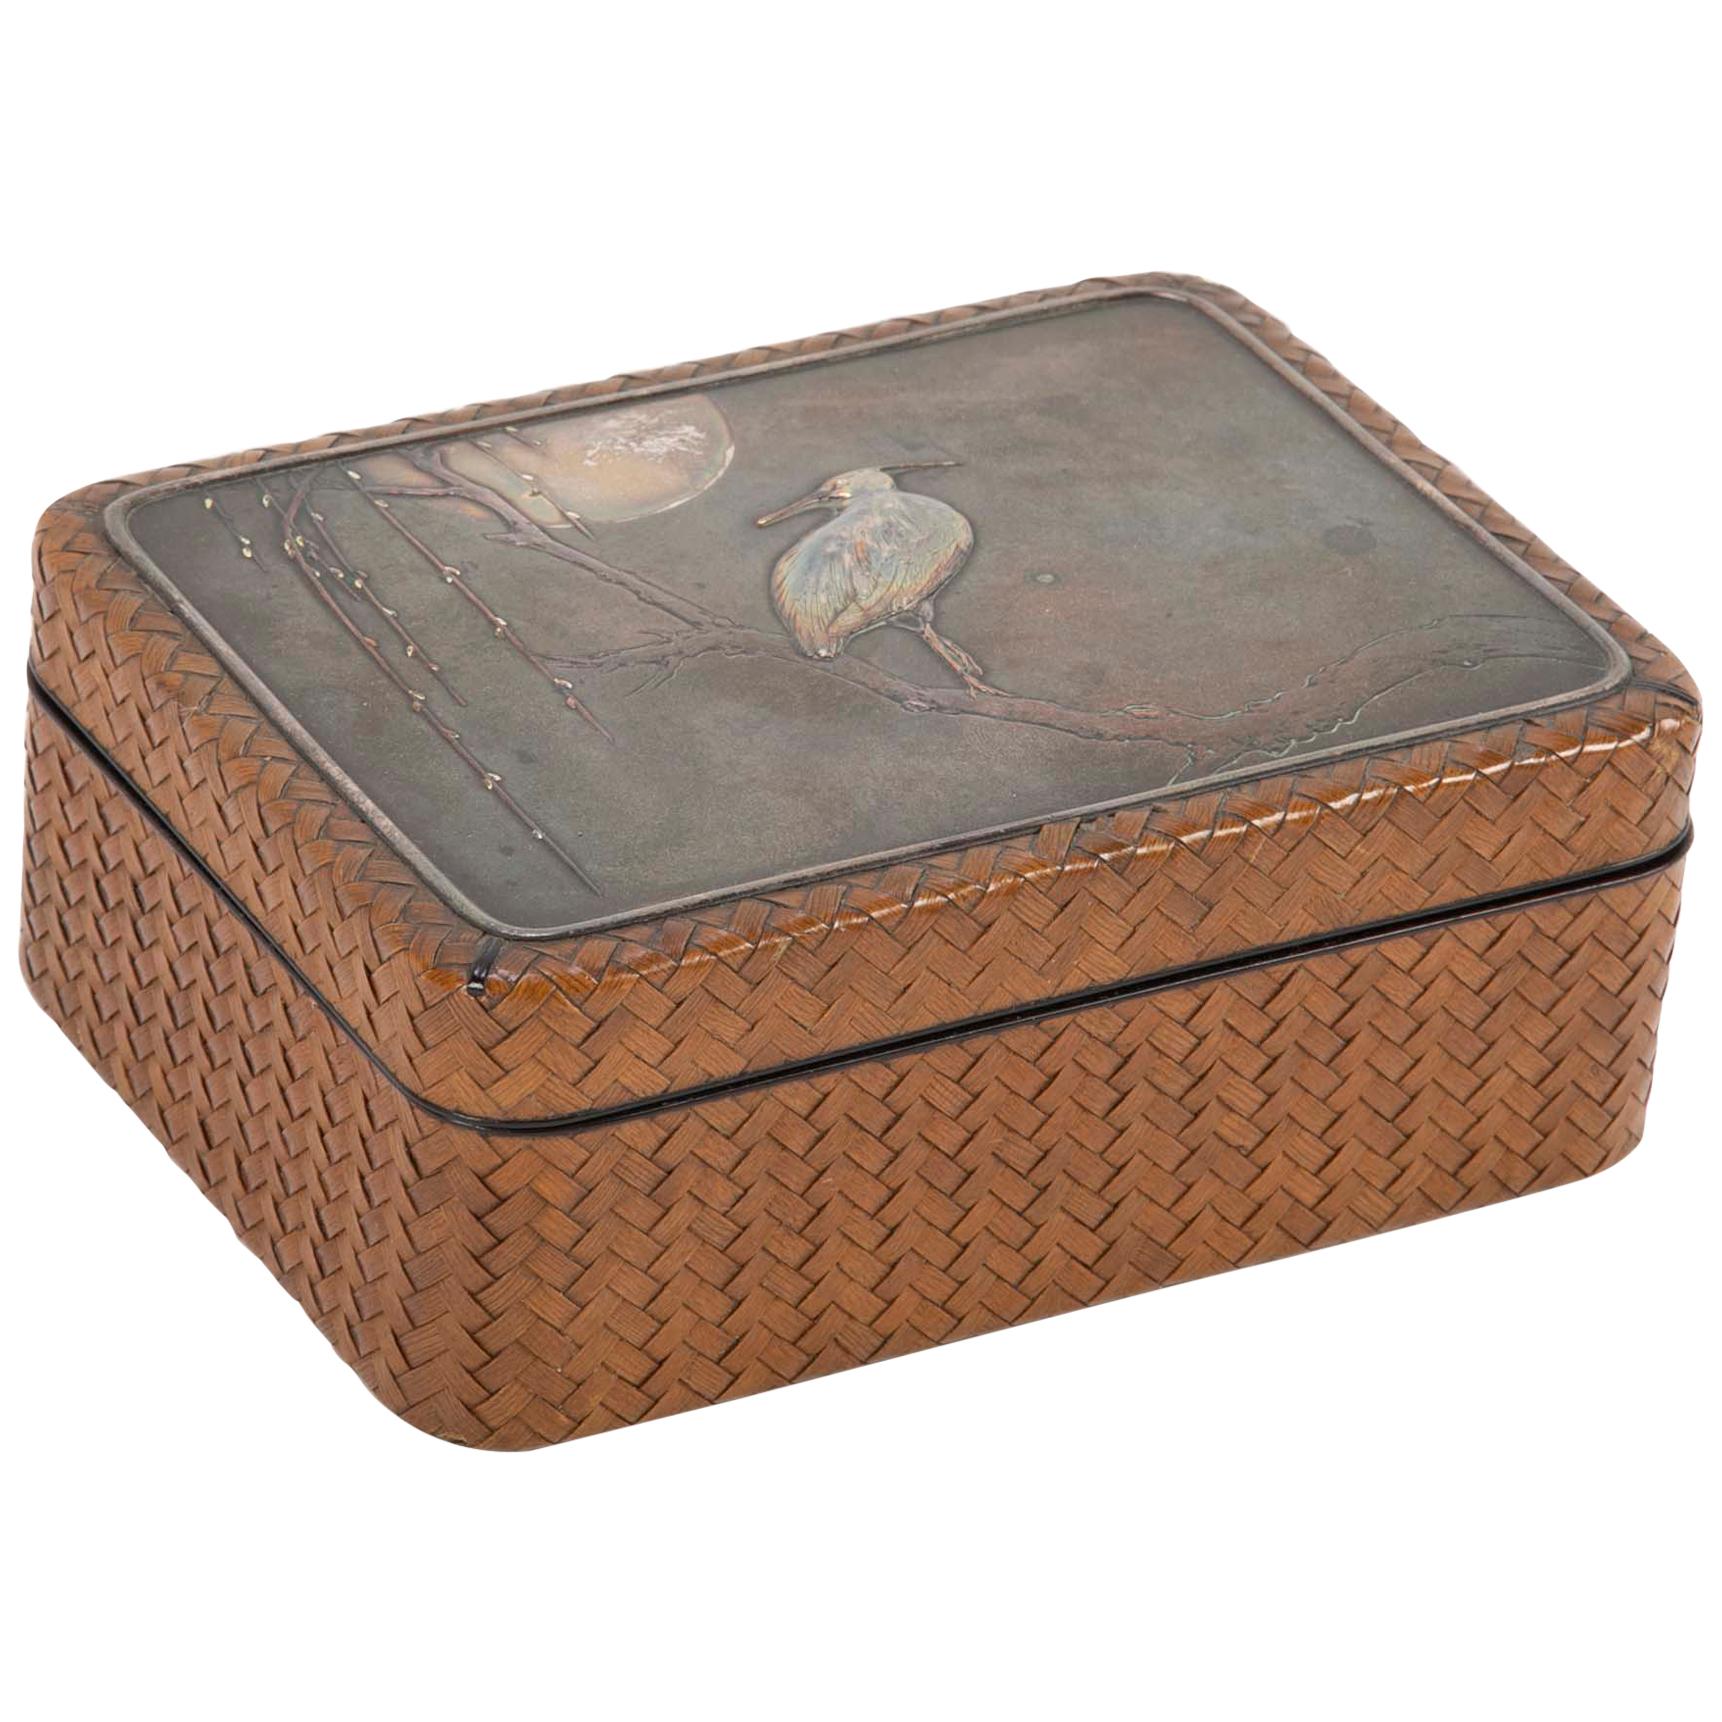 Japanese Meiji Period Box of Woven Cane, Lacquer, Silver & Copper